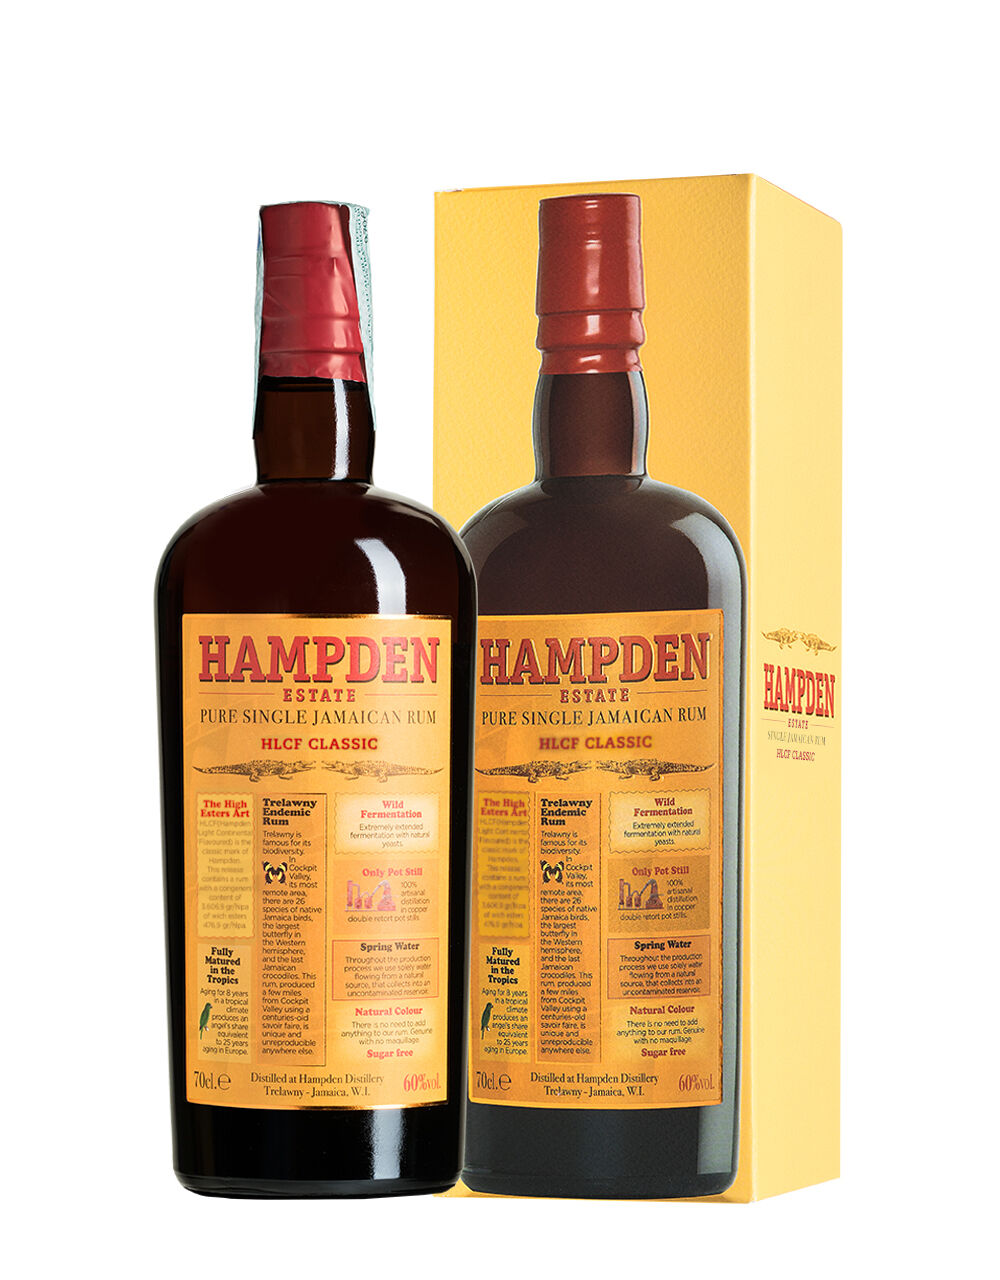 Laciviltadelbere Rum Pure Single Jamaica "HLCF Classic" Overproof 60°- Hampden